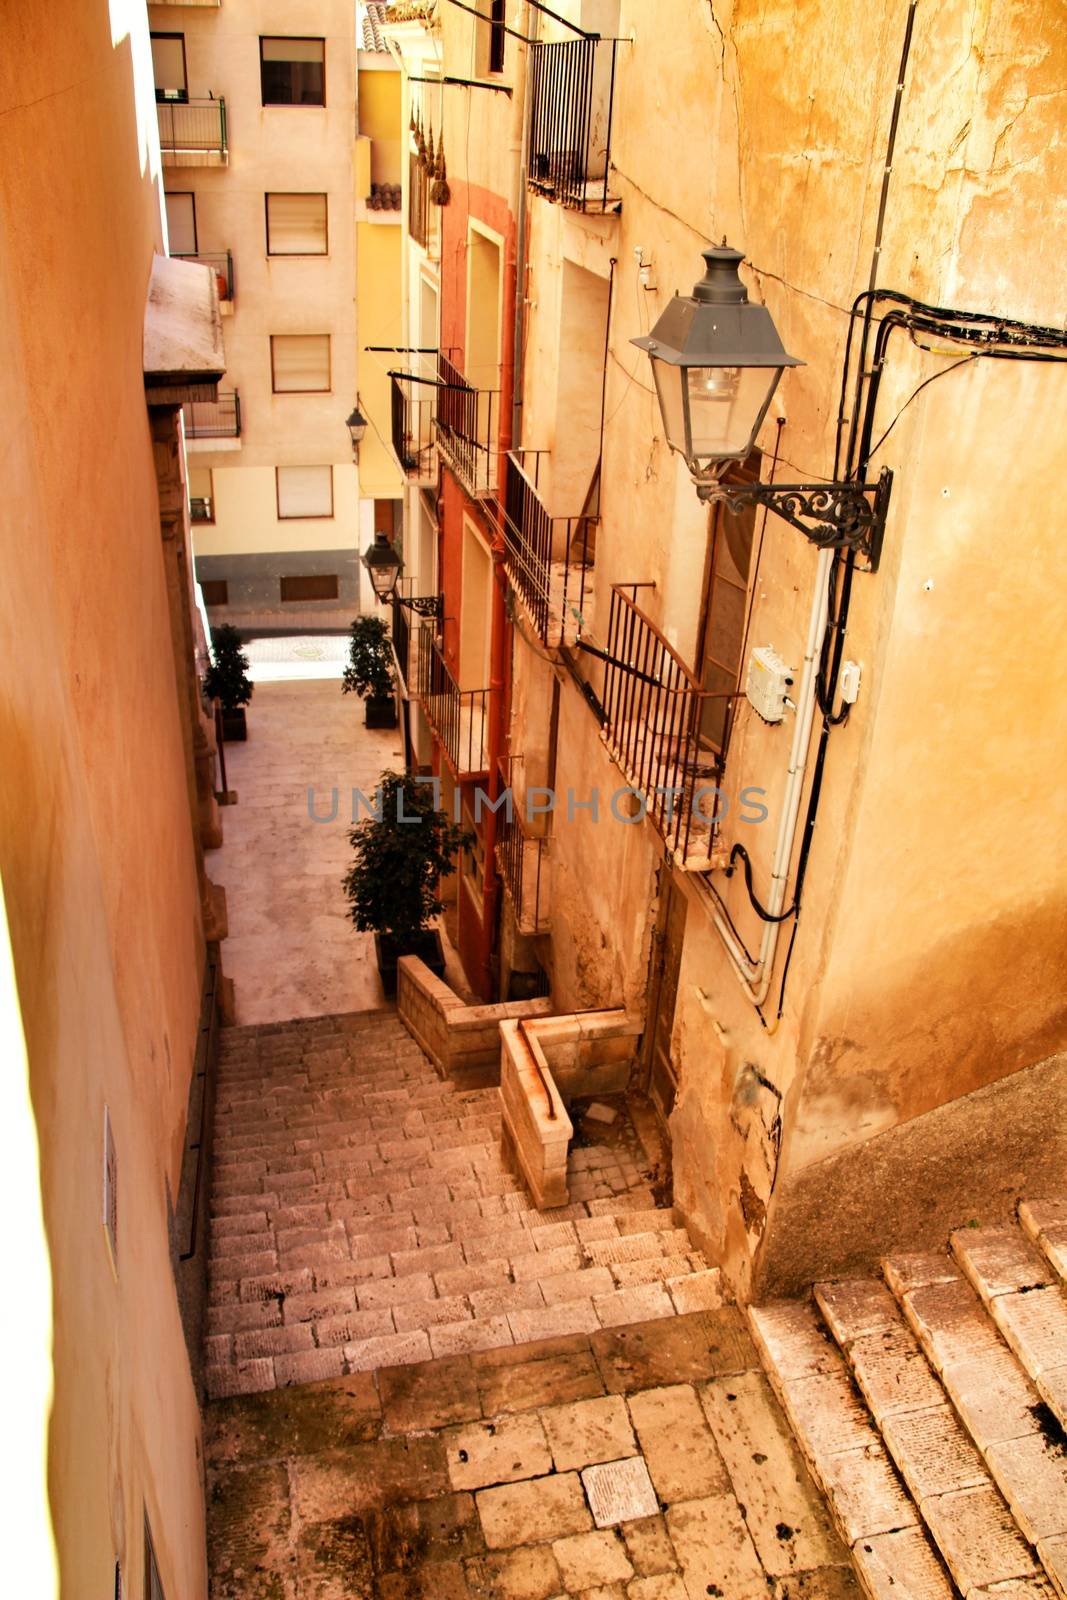 Narrow streets in Rute village in Cordoba province, Spain.